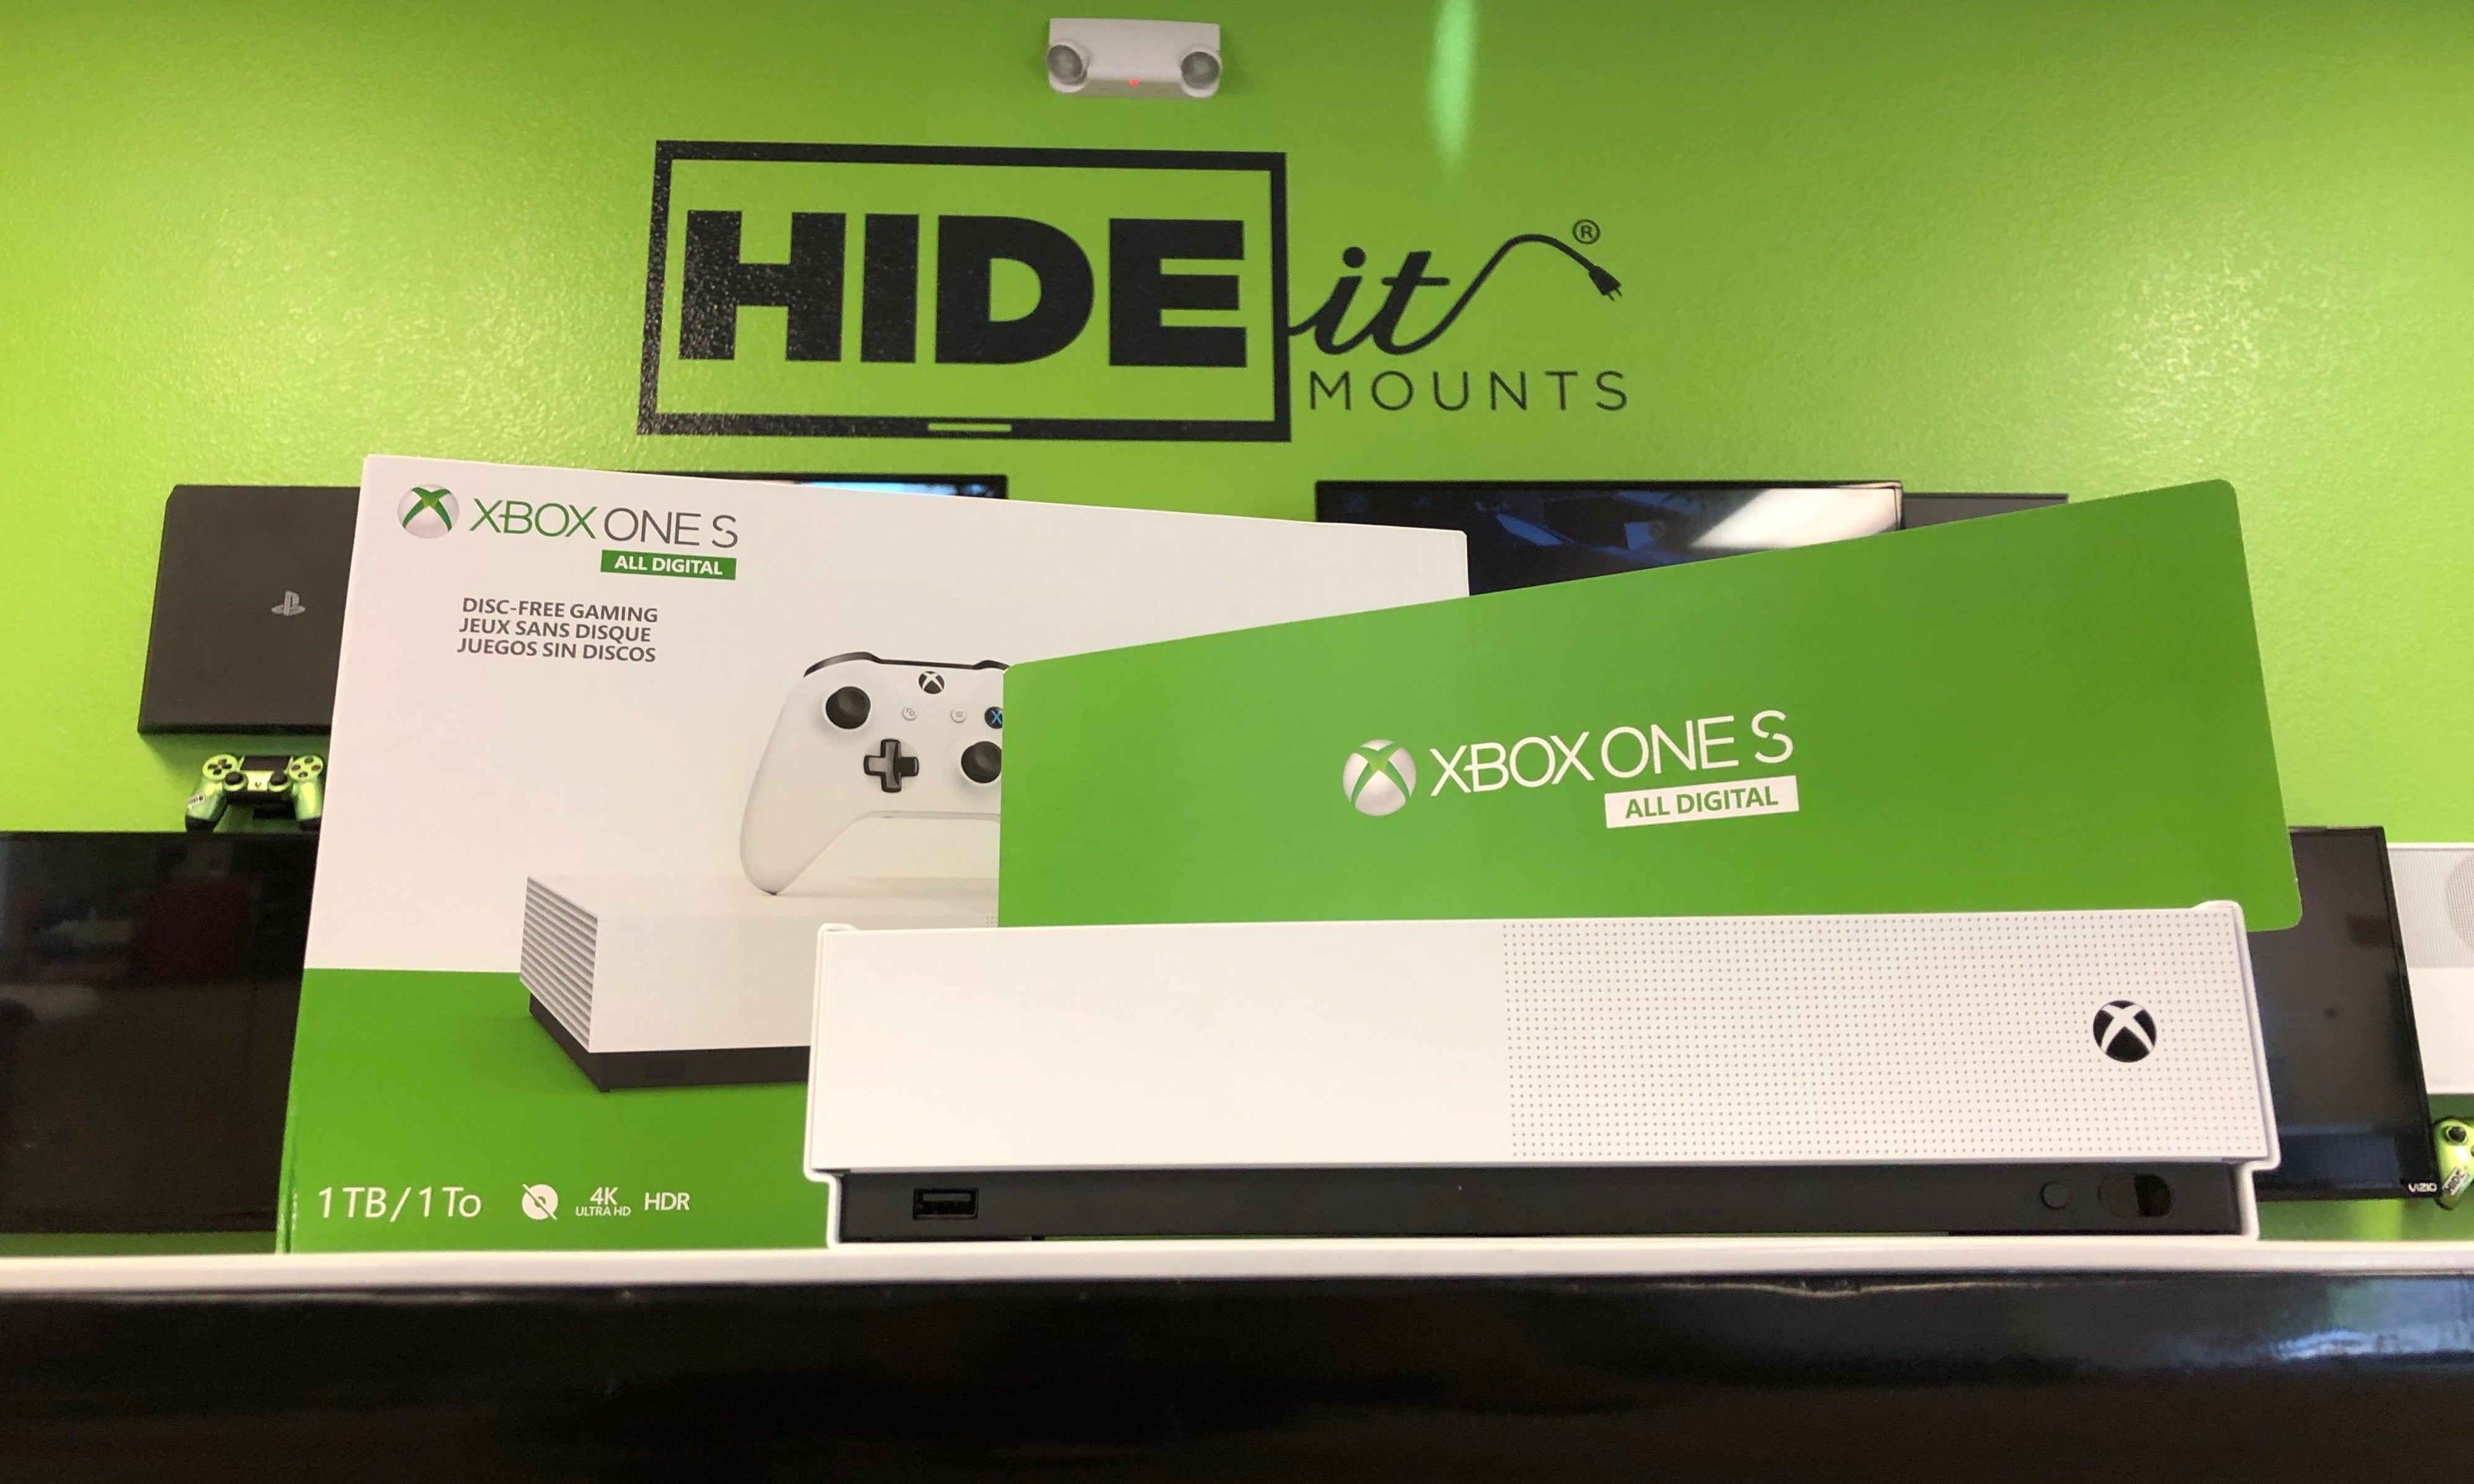 UNBOXING: Xbox One S All Digital – HIDEit Mounts